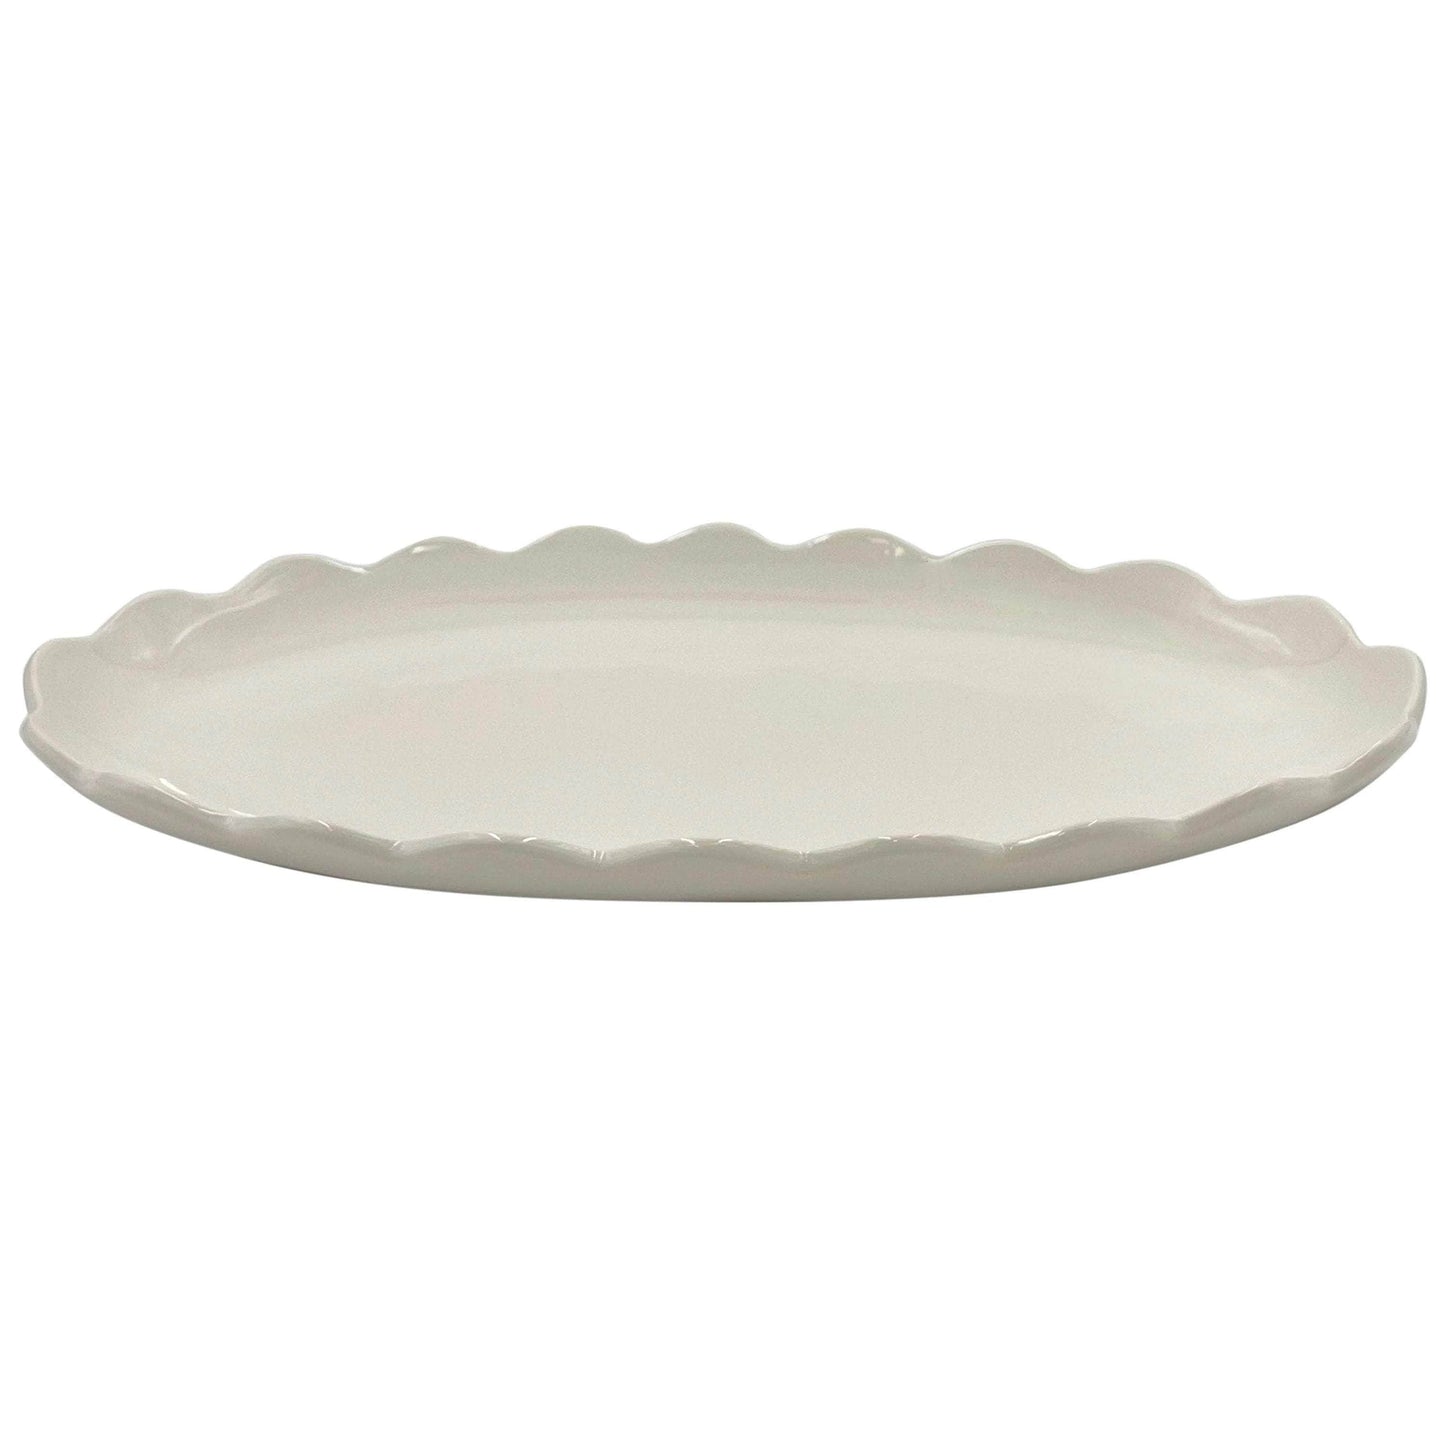 Scalloped Large Oval Platter